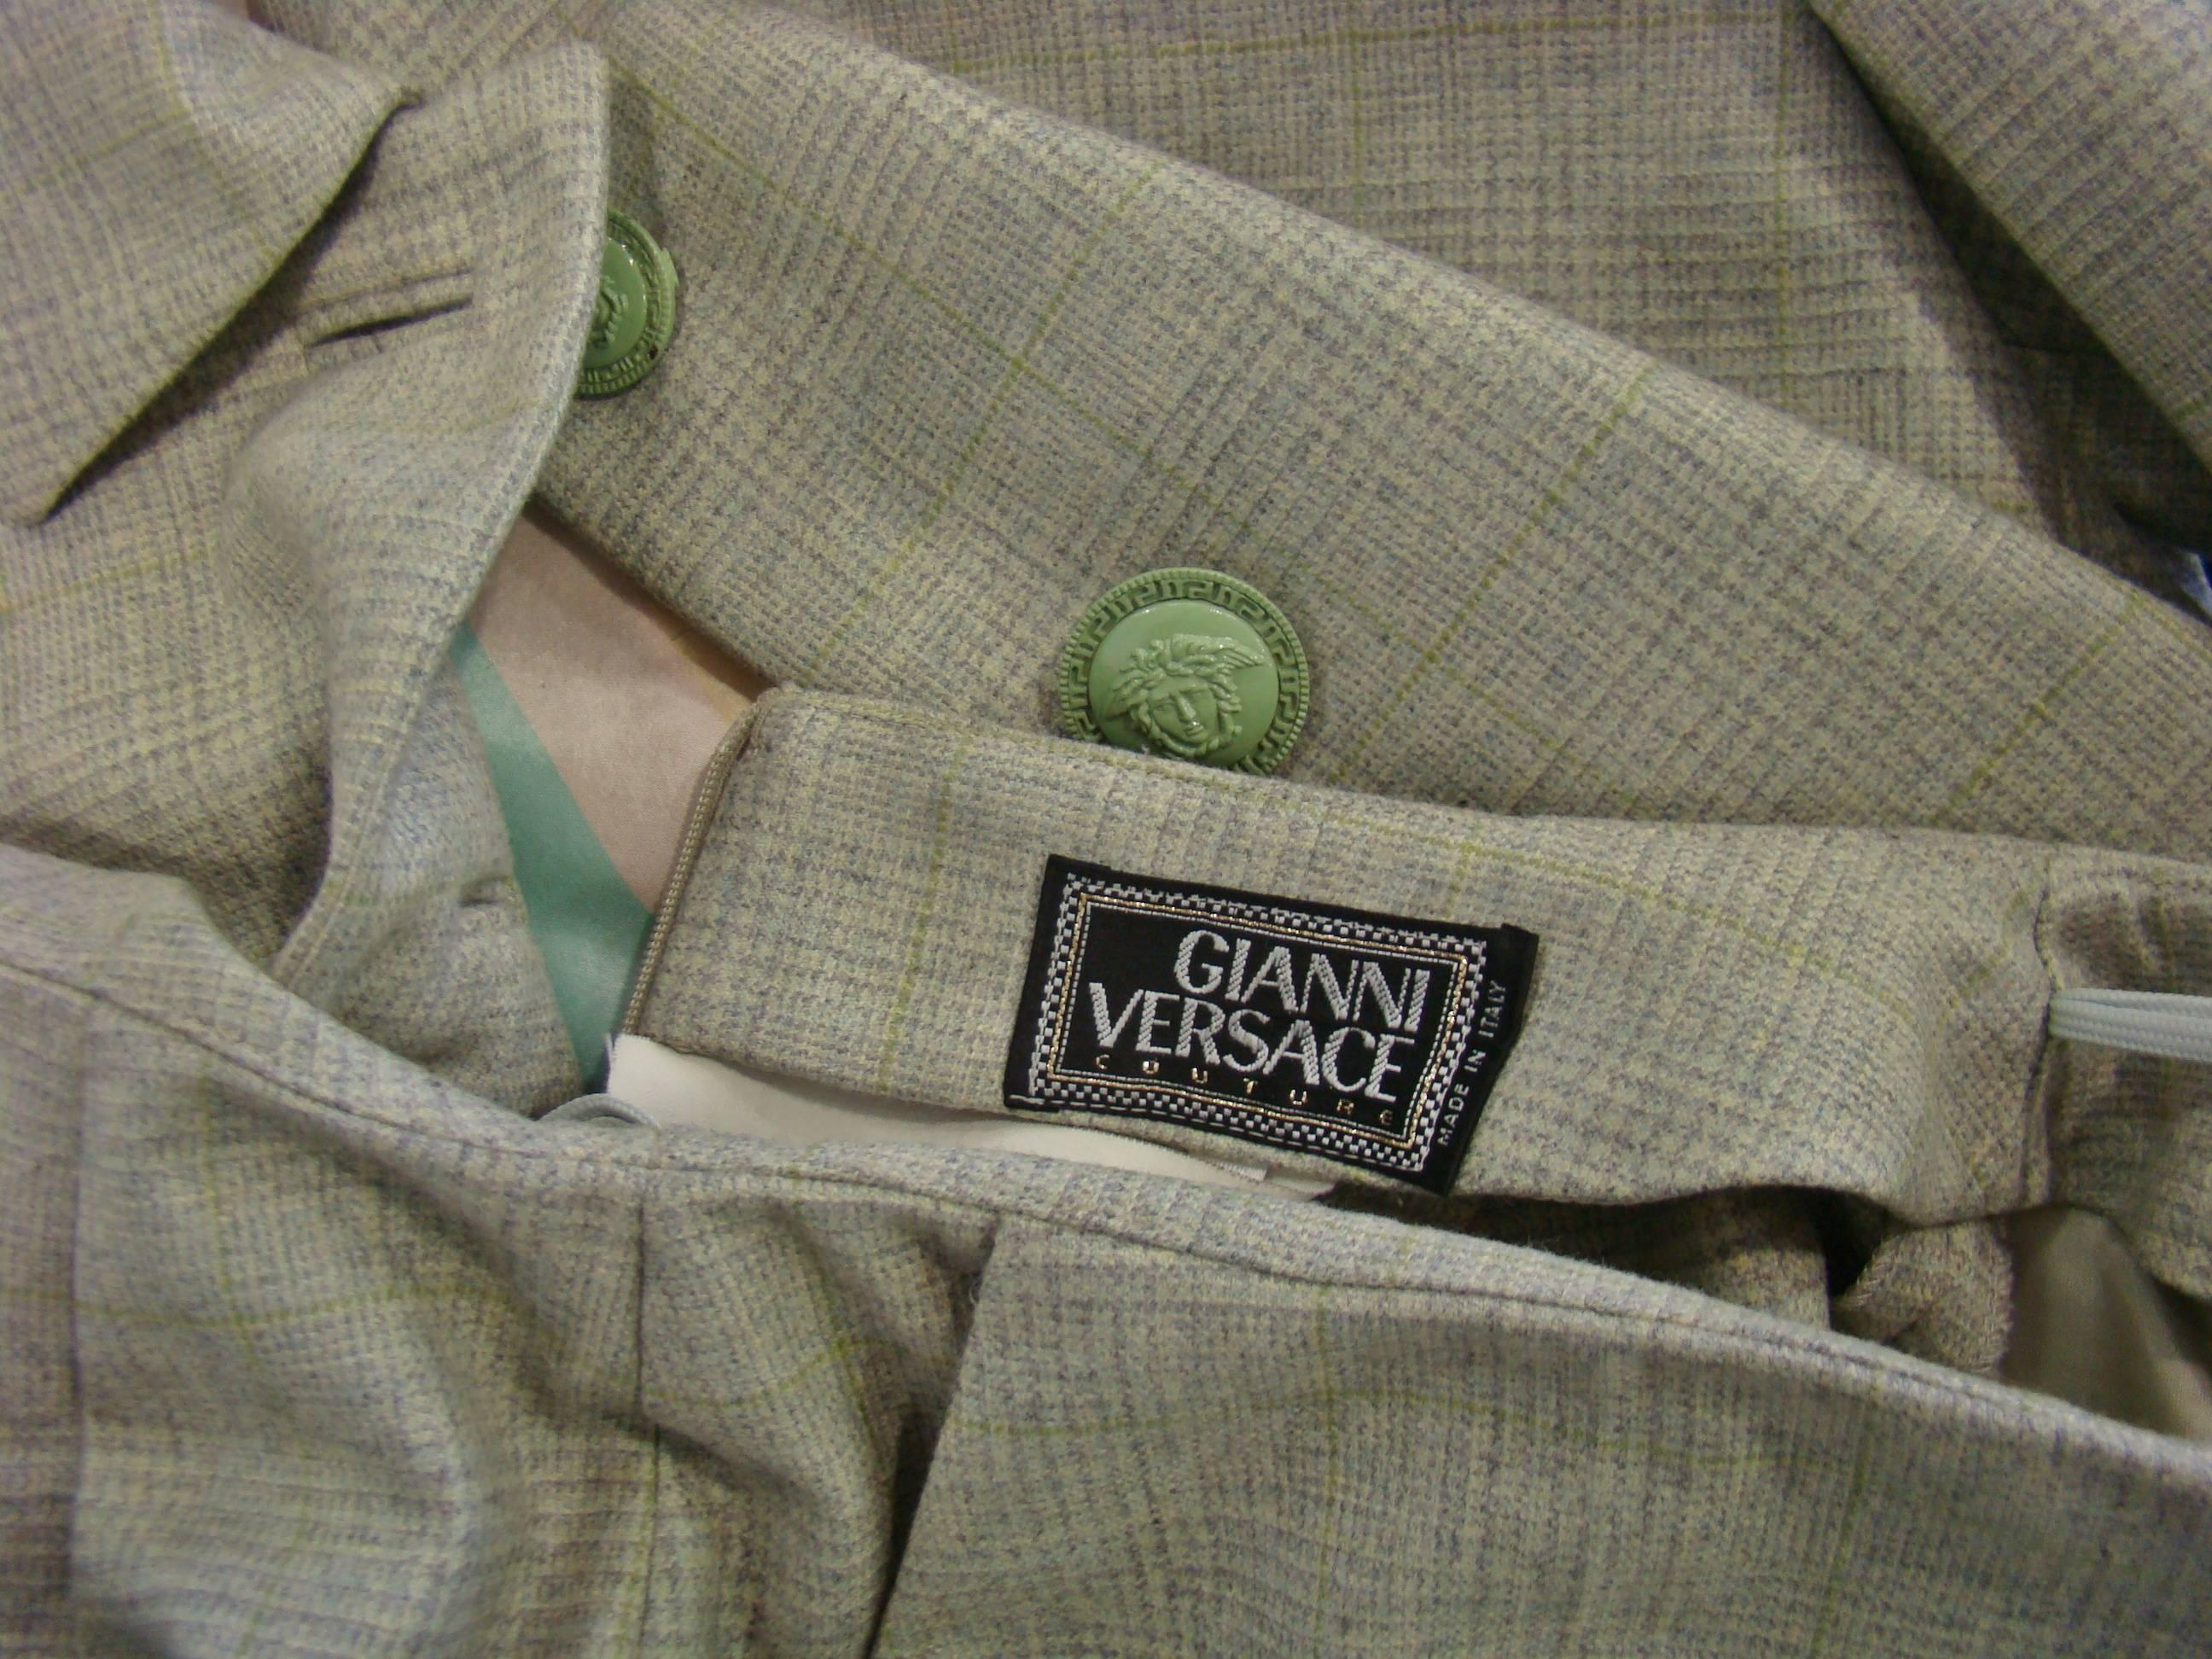 Gianni Versace Mint Green Prens De Gal Wool Pants Suit For Sale 2